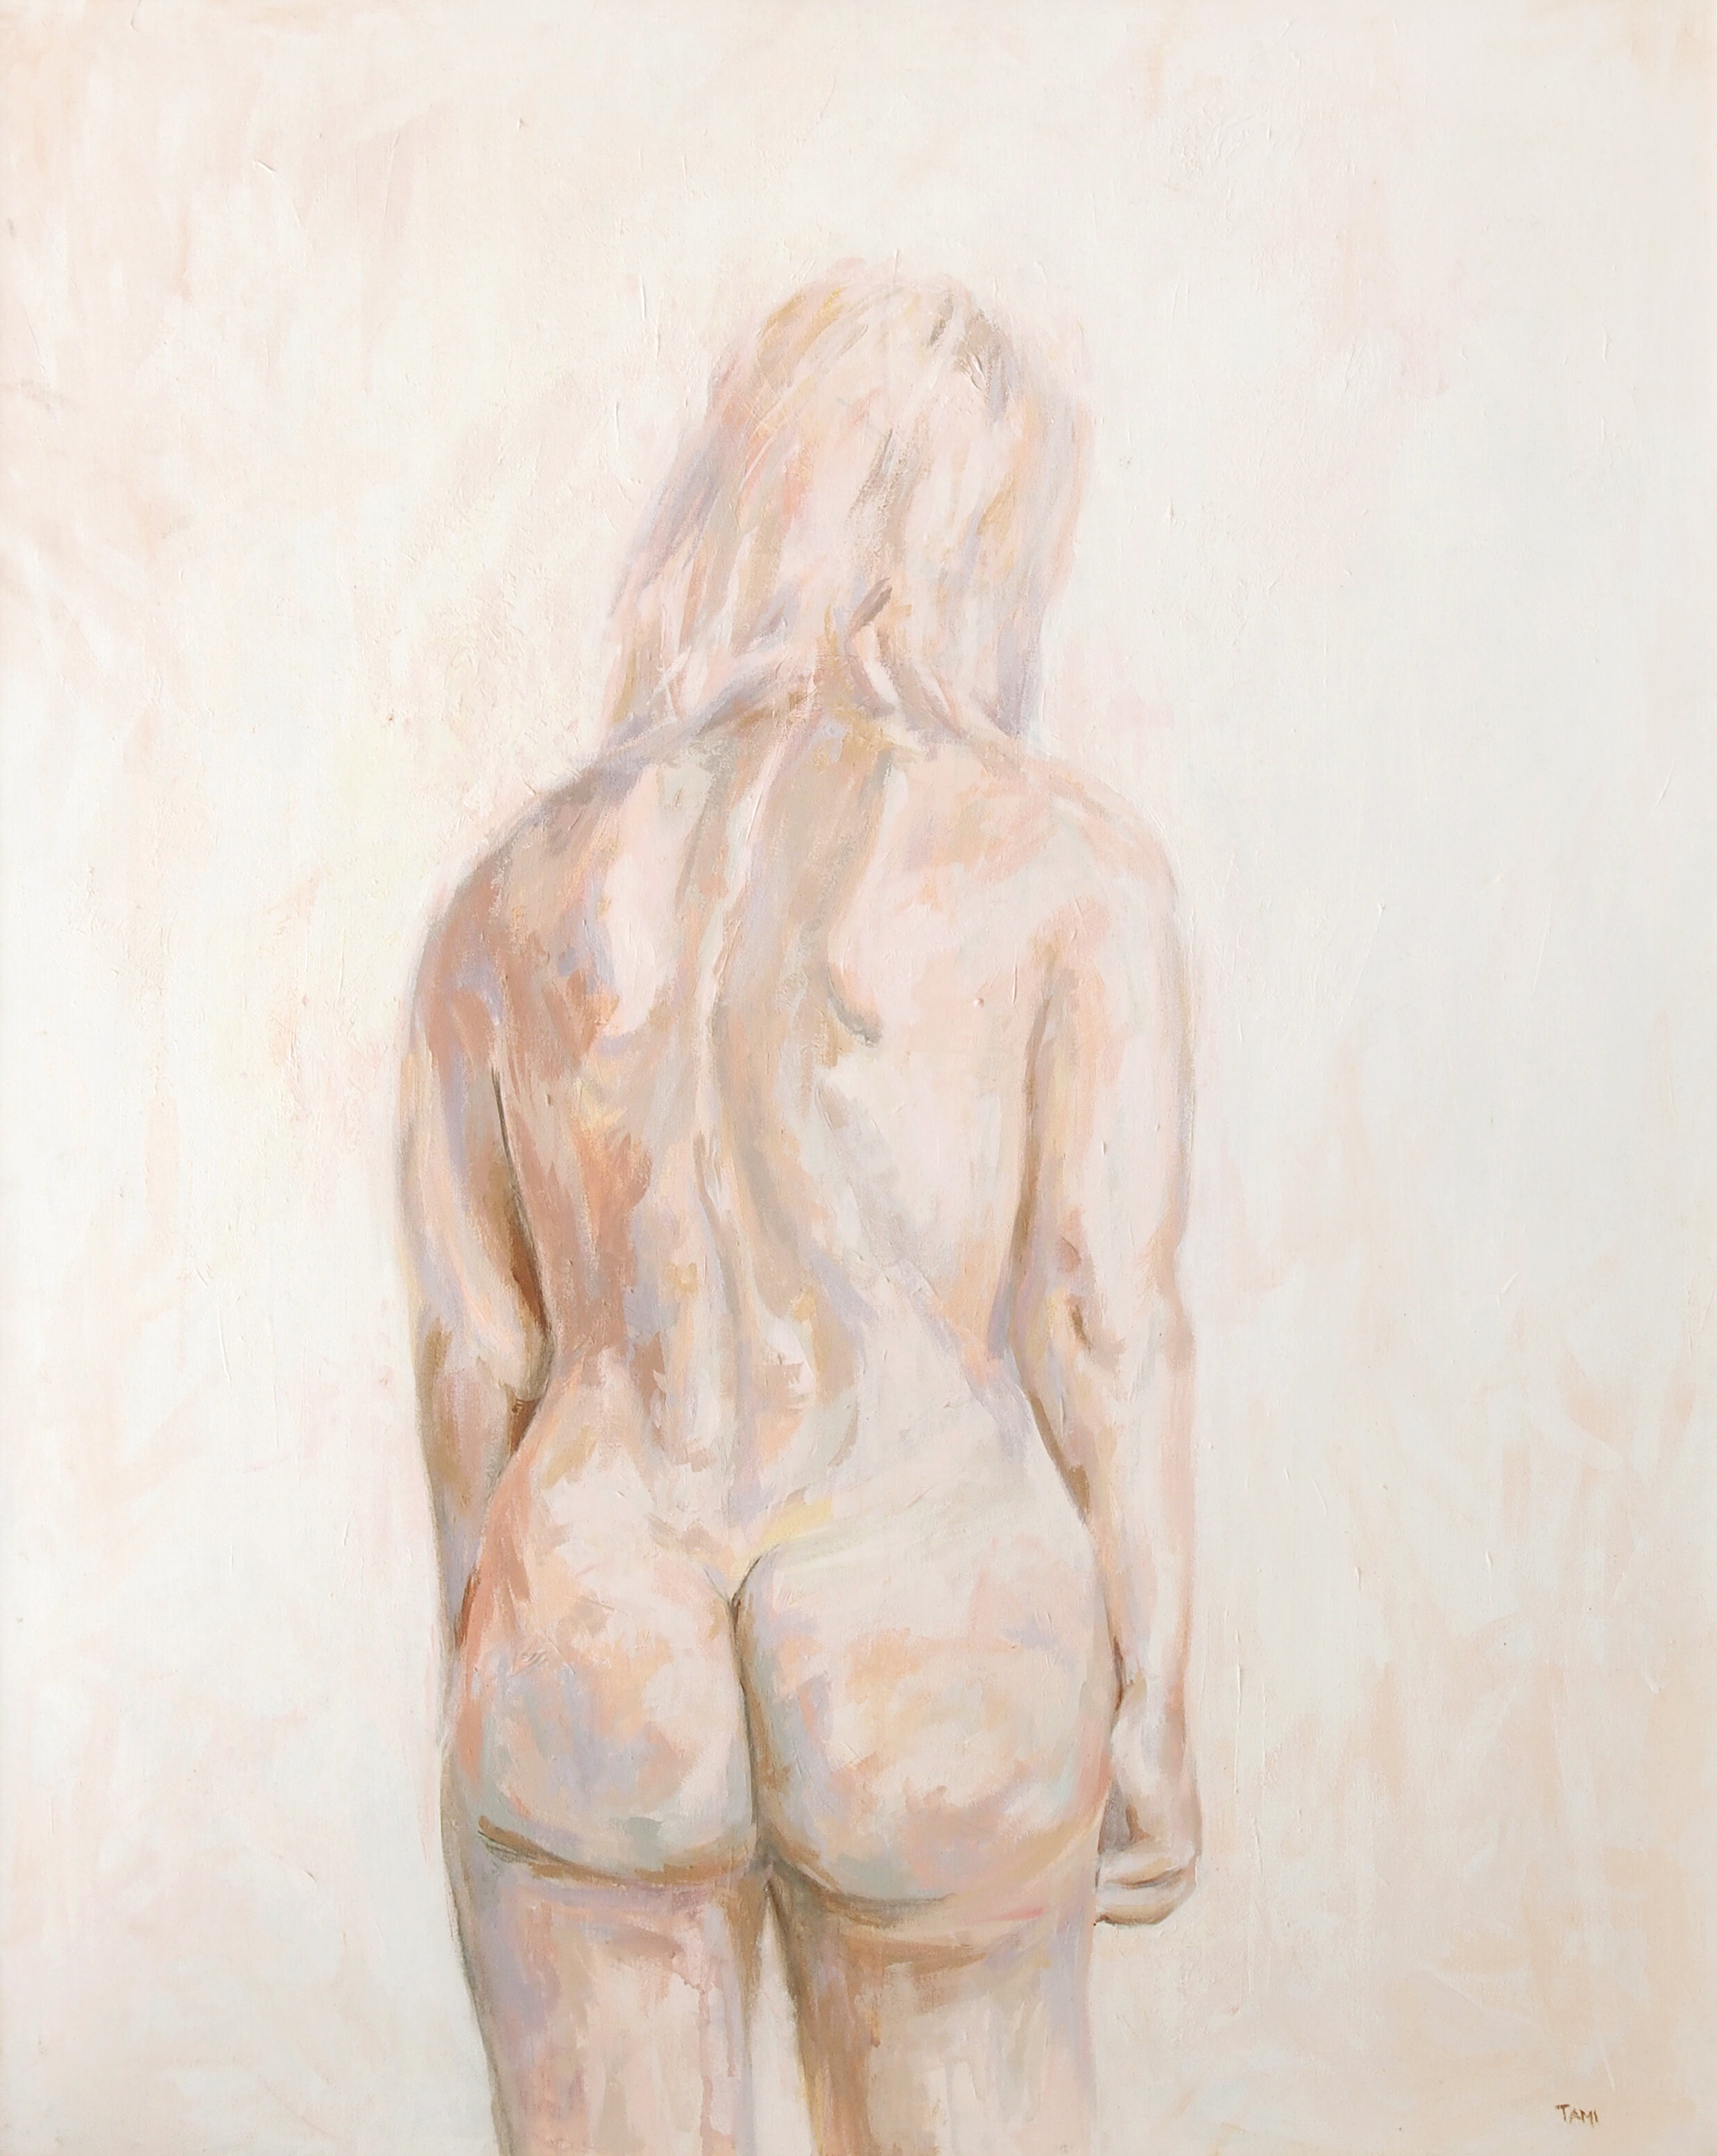  Misanthrope, acrylic on canvas, 1 m x 80 cm, 2012. 